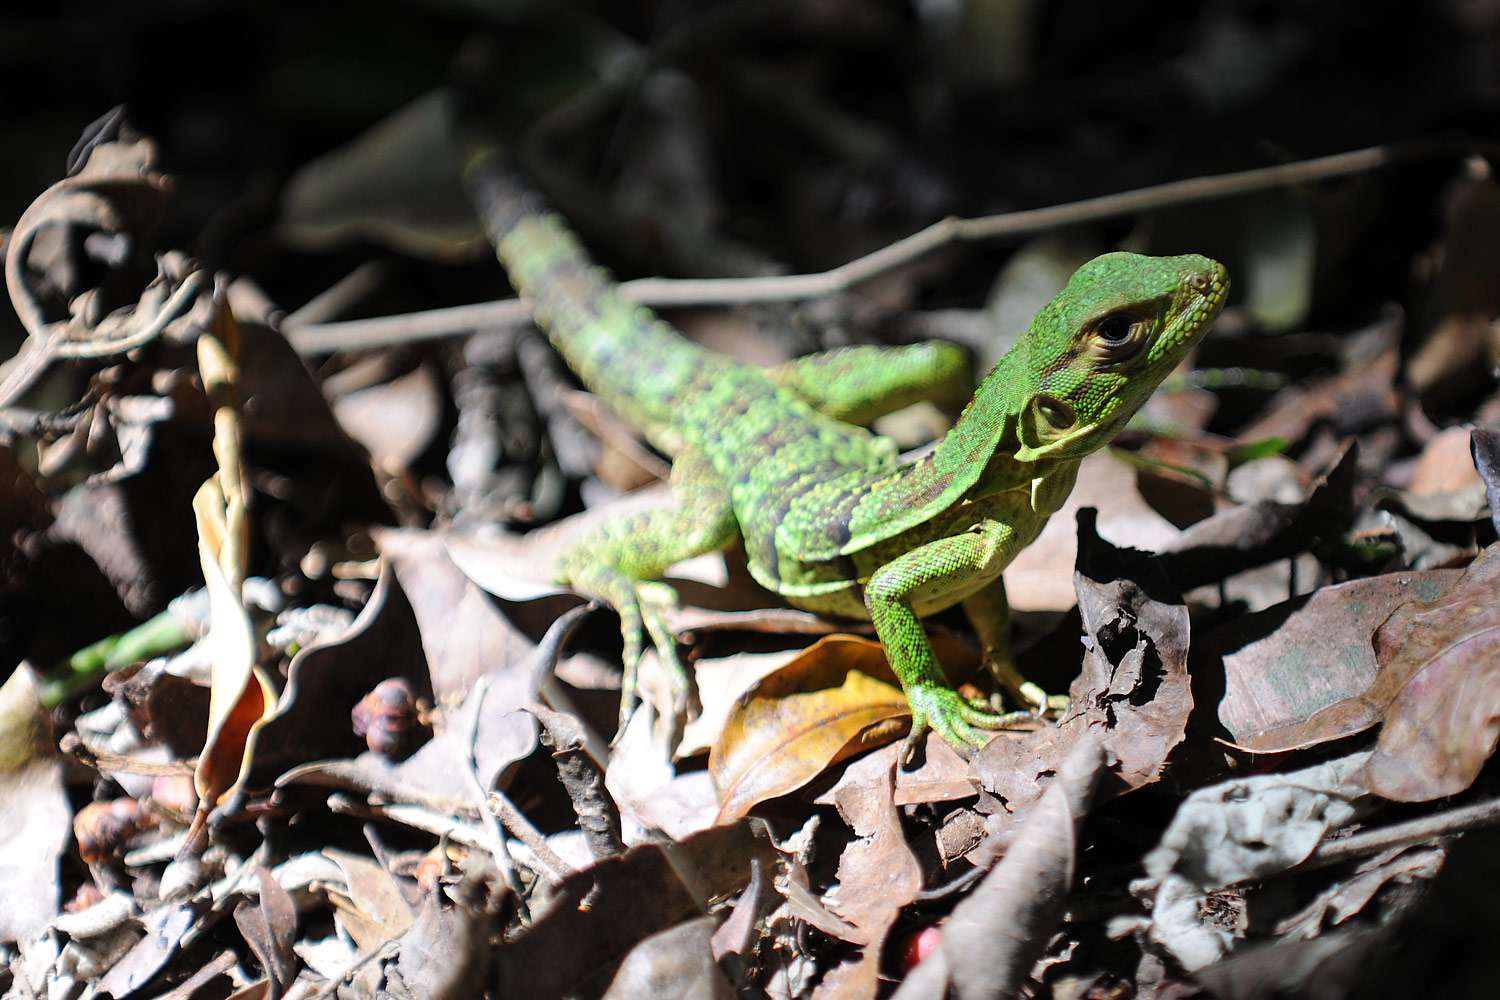 A small green Costa Rican lizard.